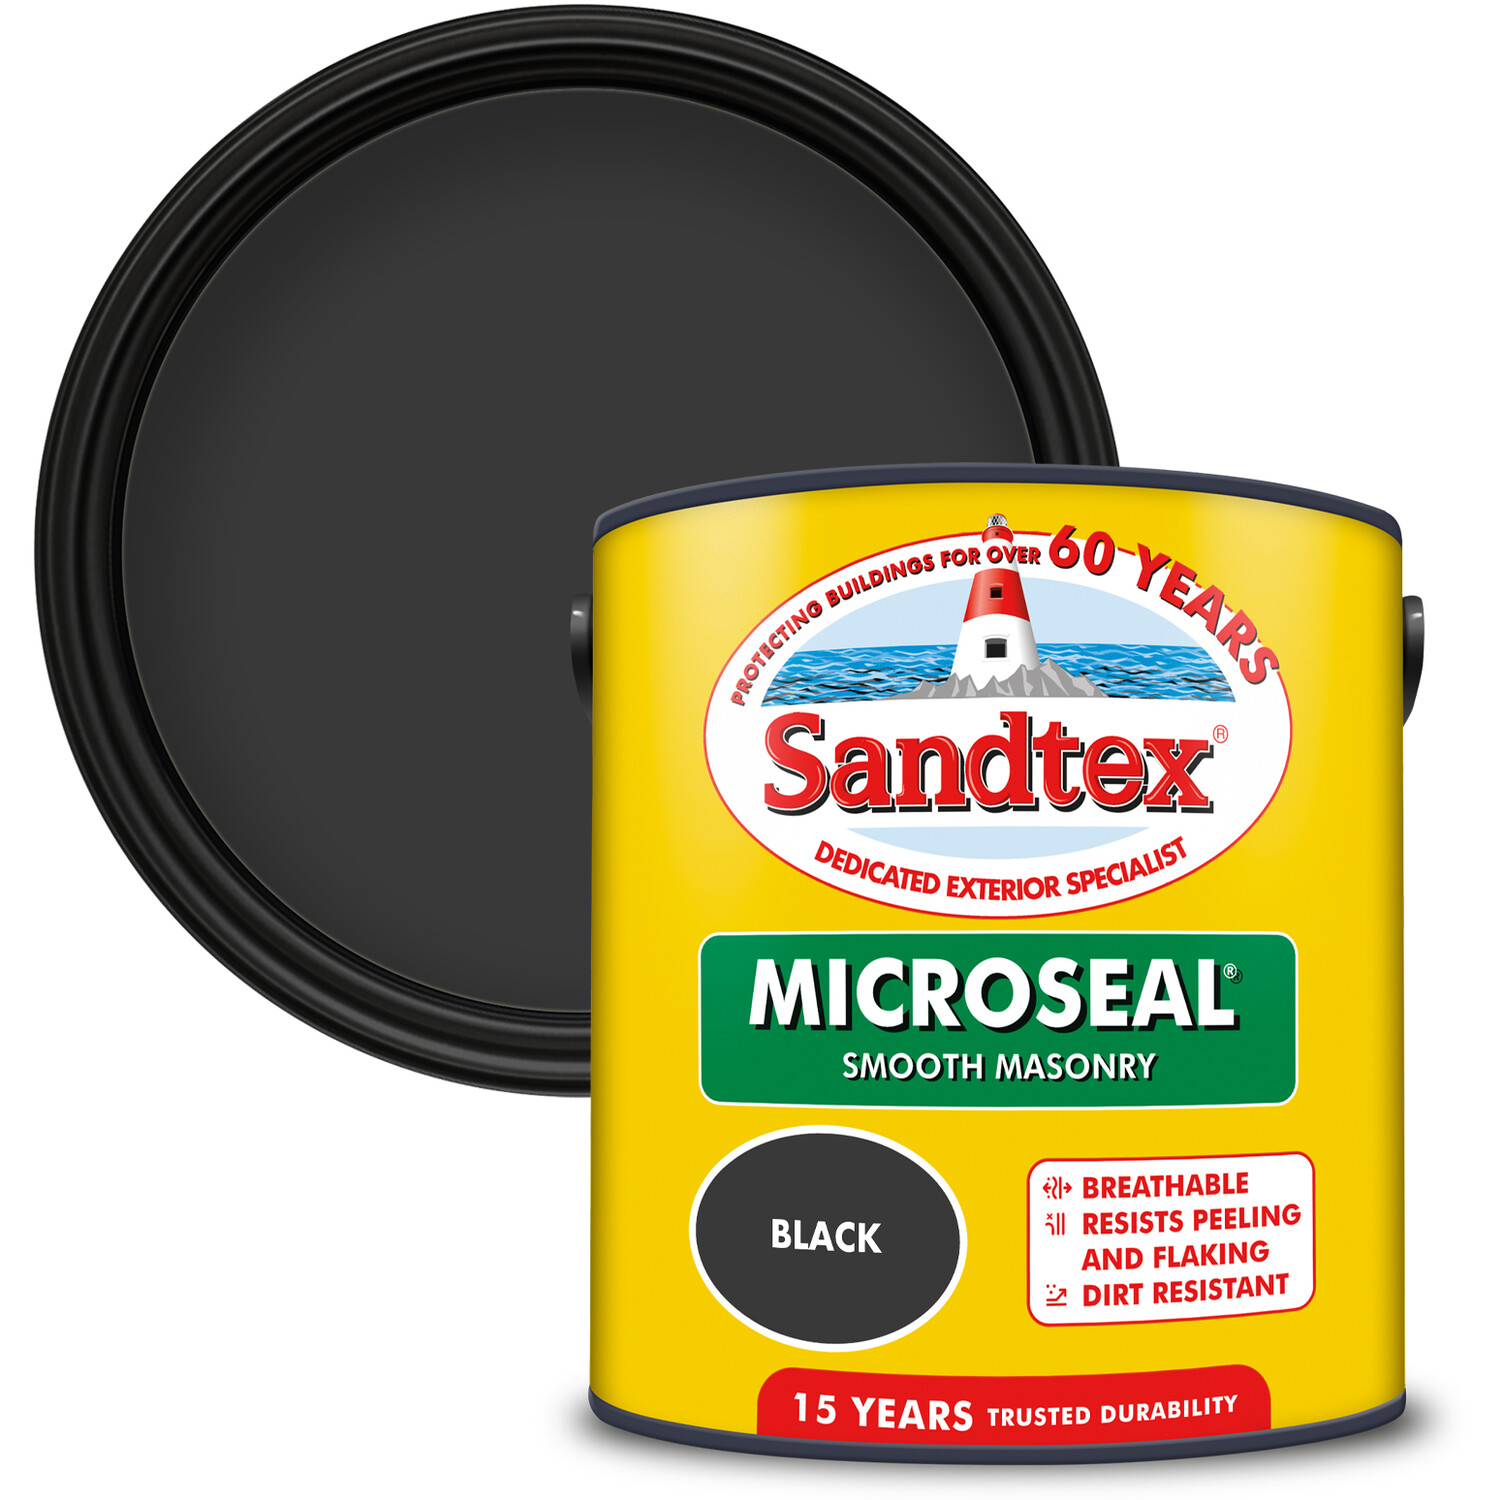 Sandtex Walls Black Microseal Smooth Masonry Matt Paint 2.5L Image 1